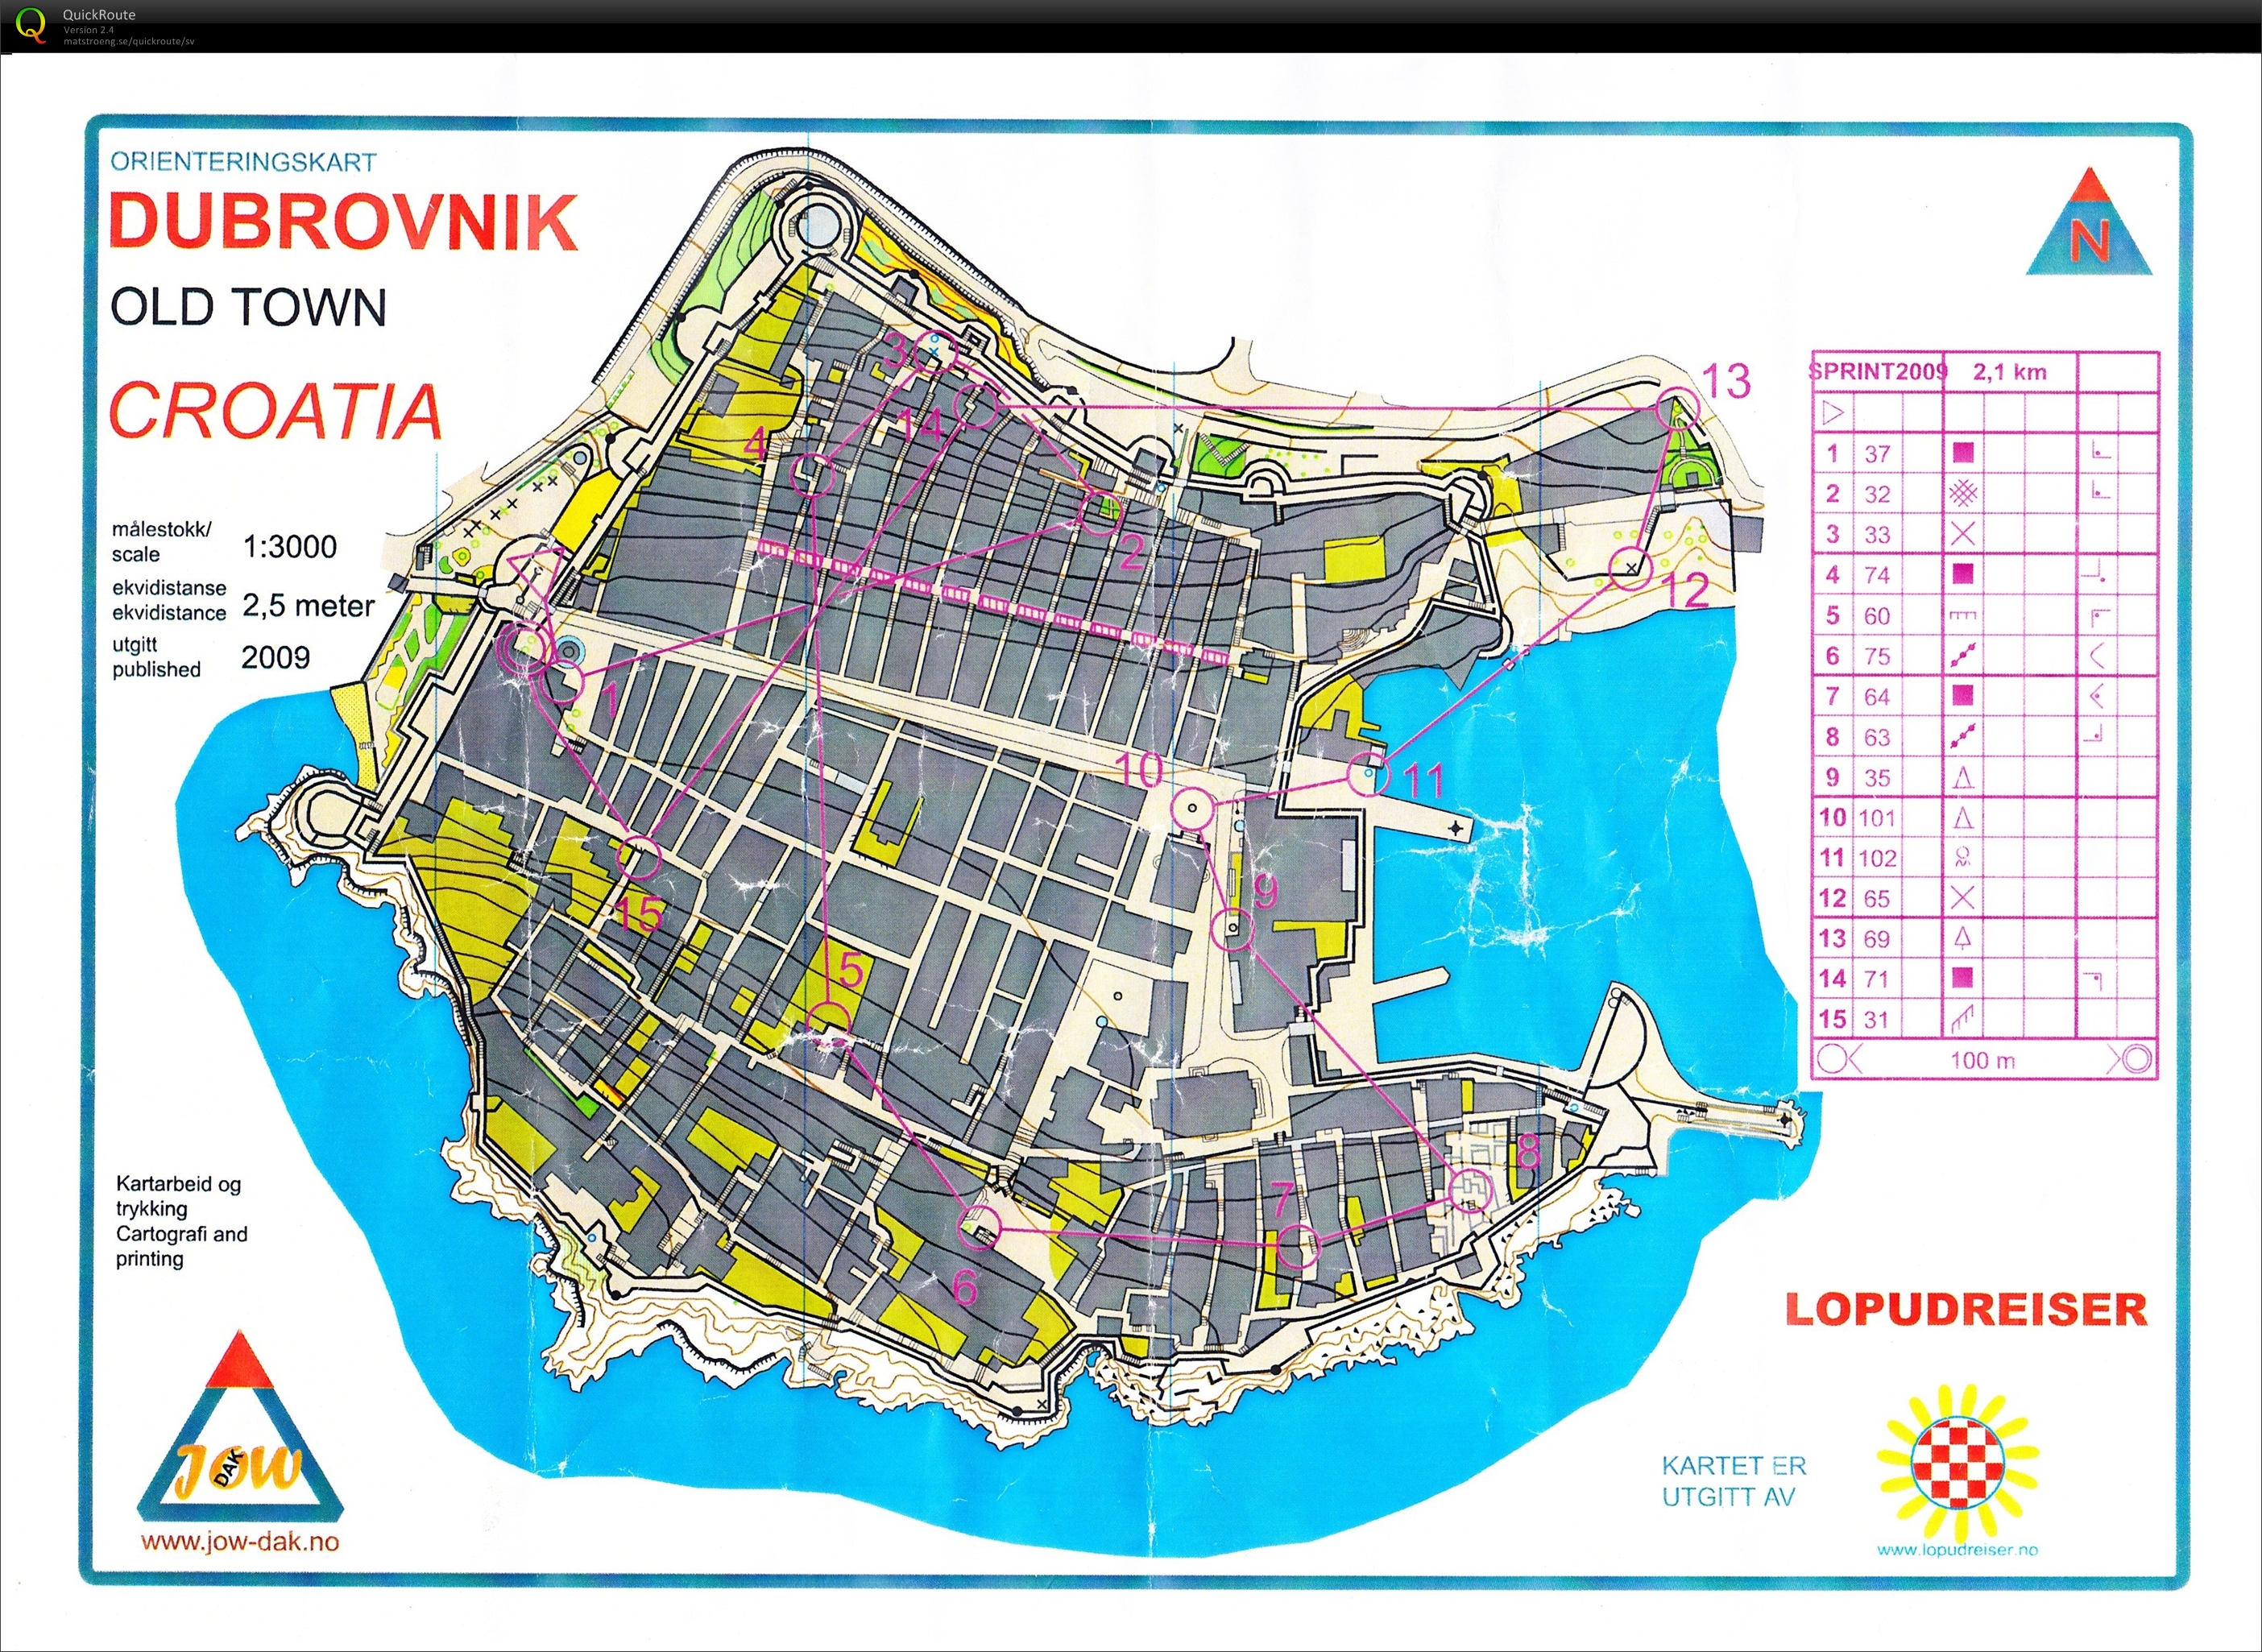 Sprinttrening, Dubrovnik (27/07/2013)